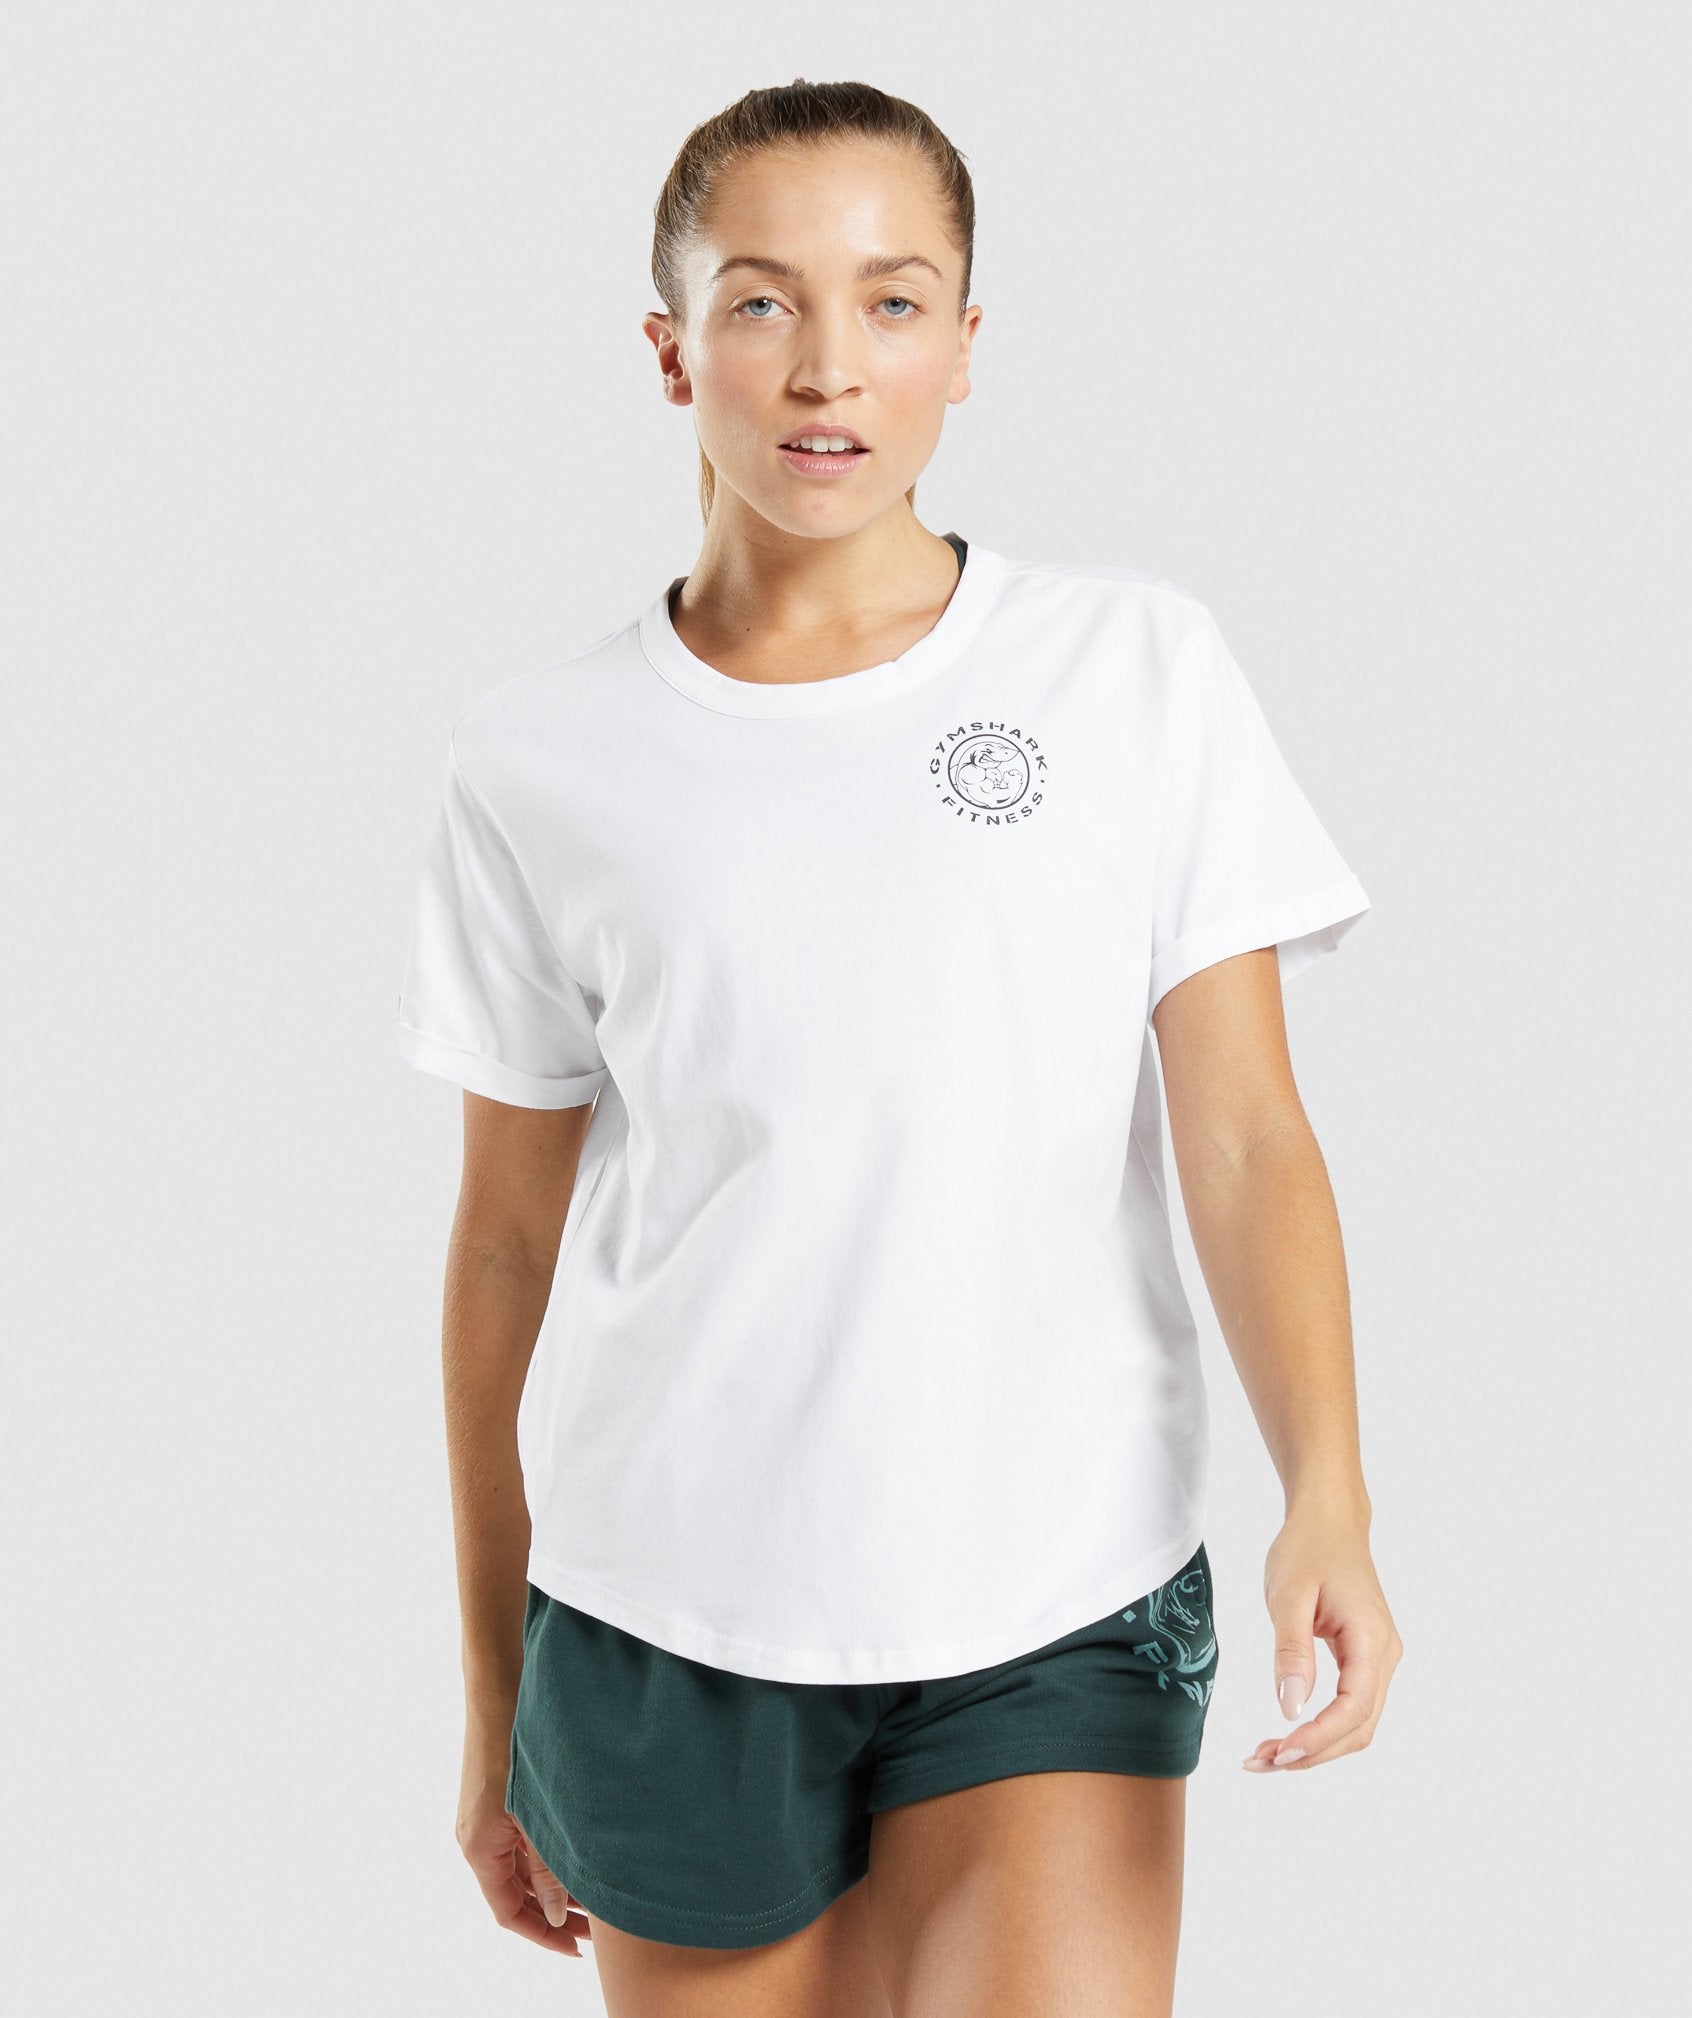 Buy Gymshark Legacy T Shirt Online Paraguay